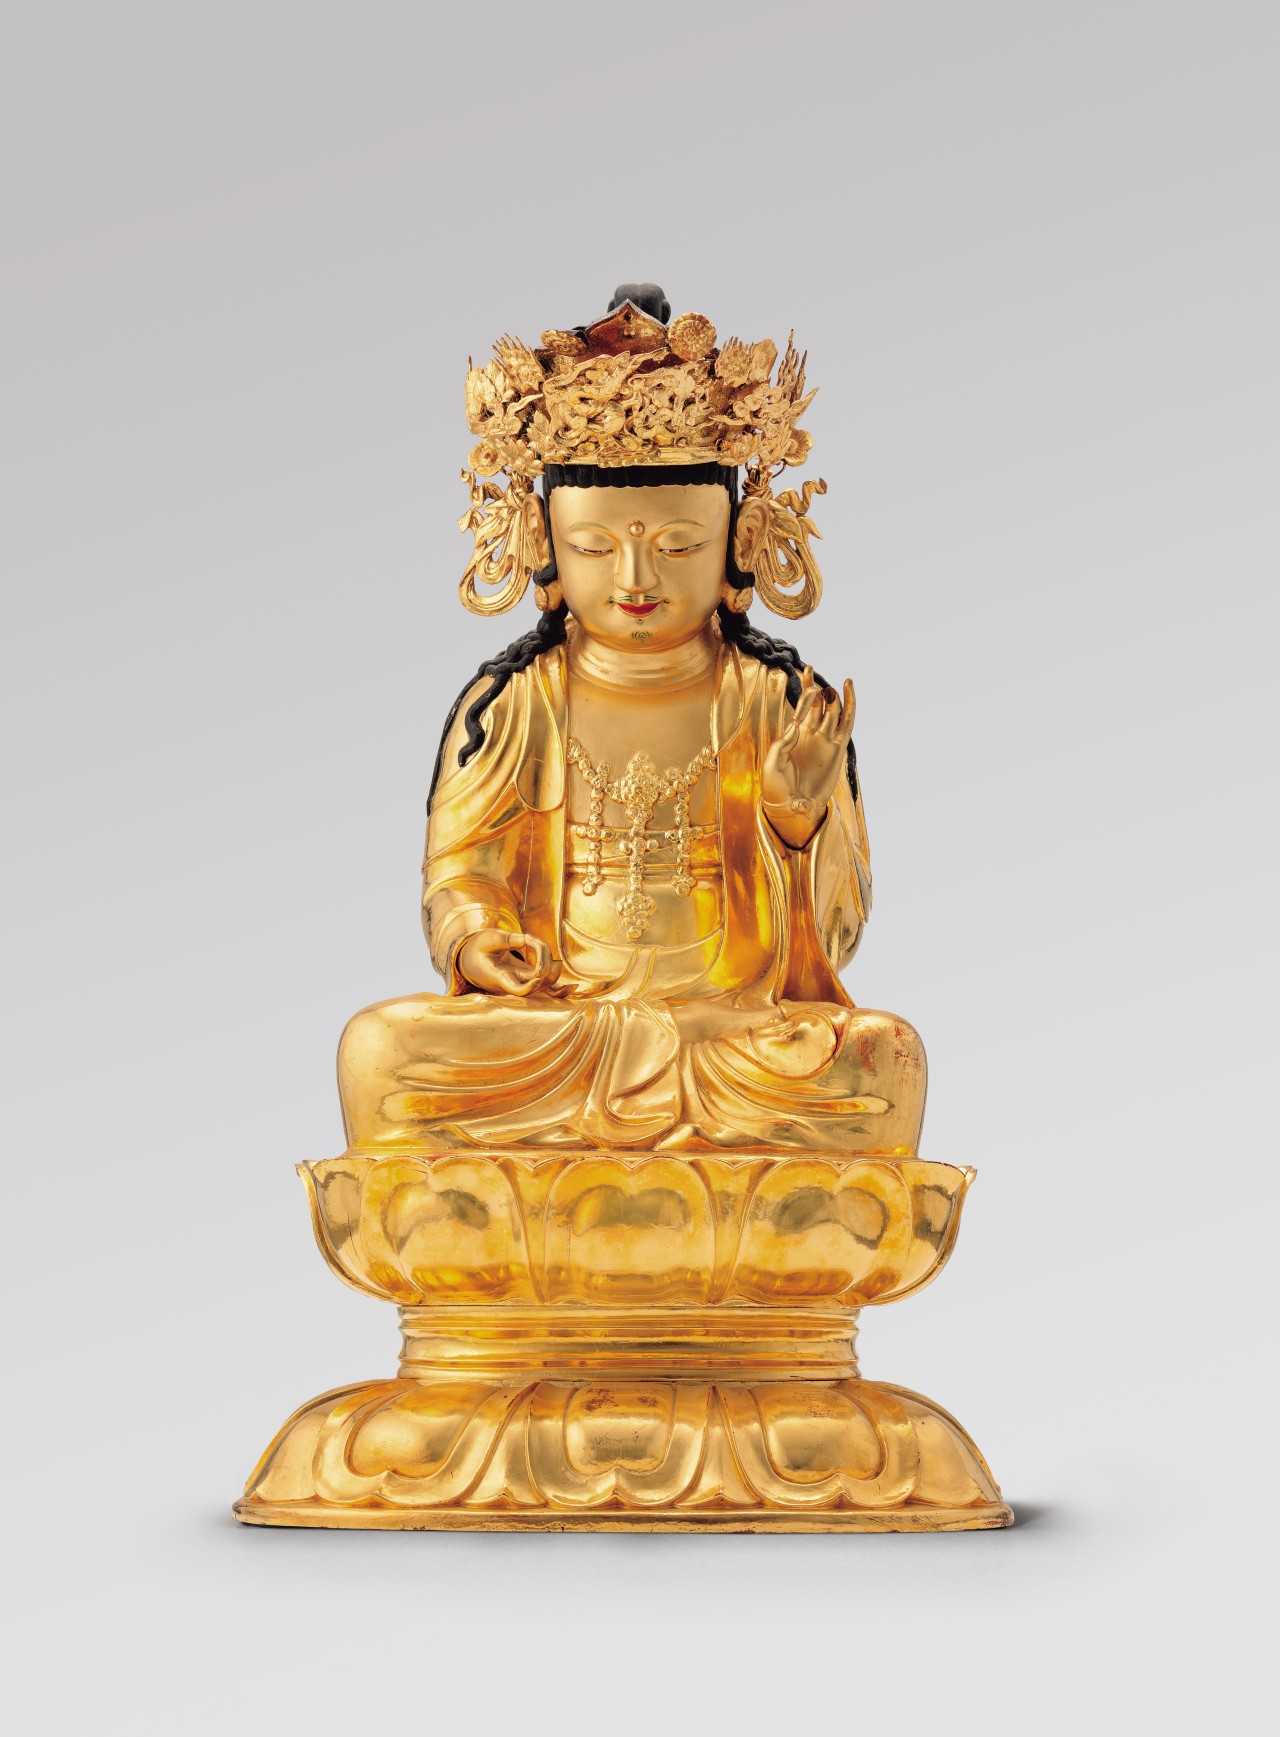 The Wooden Seated Avalokiteshvara Bodhisattva from Buramsa, a temple in Namyangju, Gyeonggi Province (CHA)